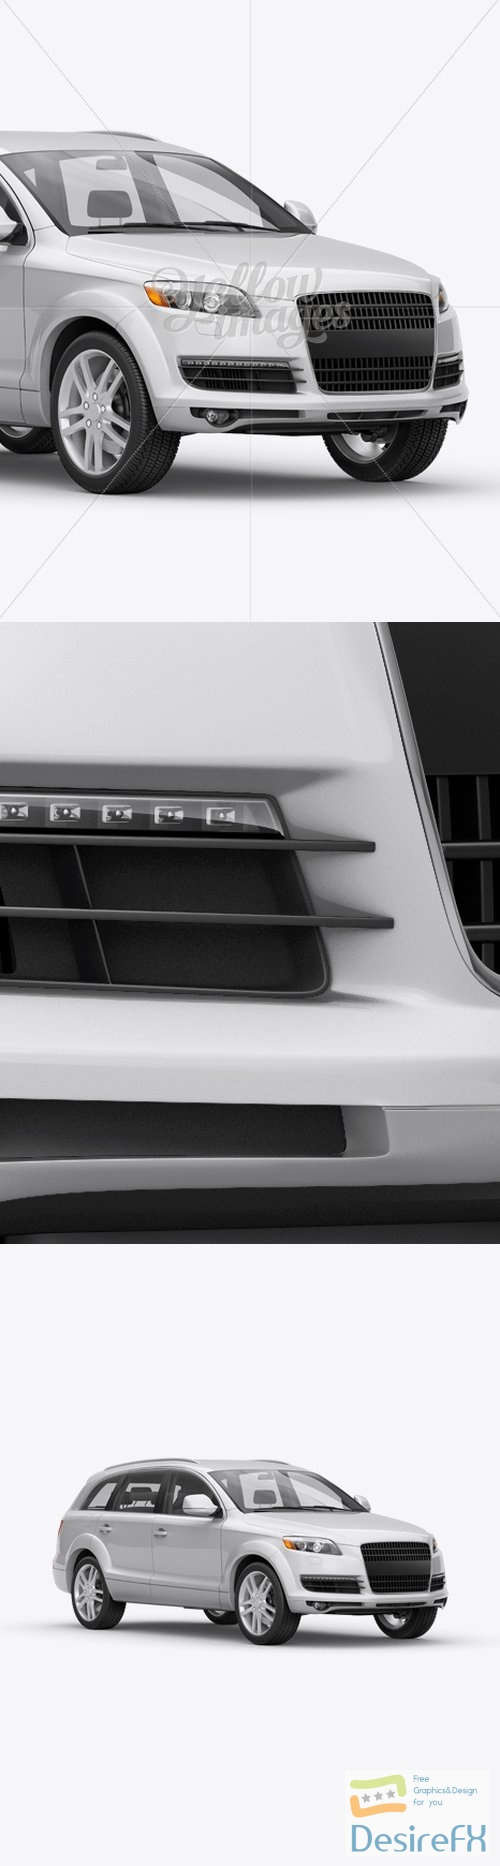 Audi Q7 Mockup - Halfside View 13189